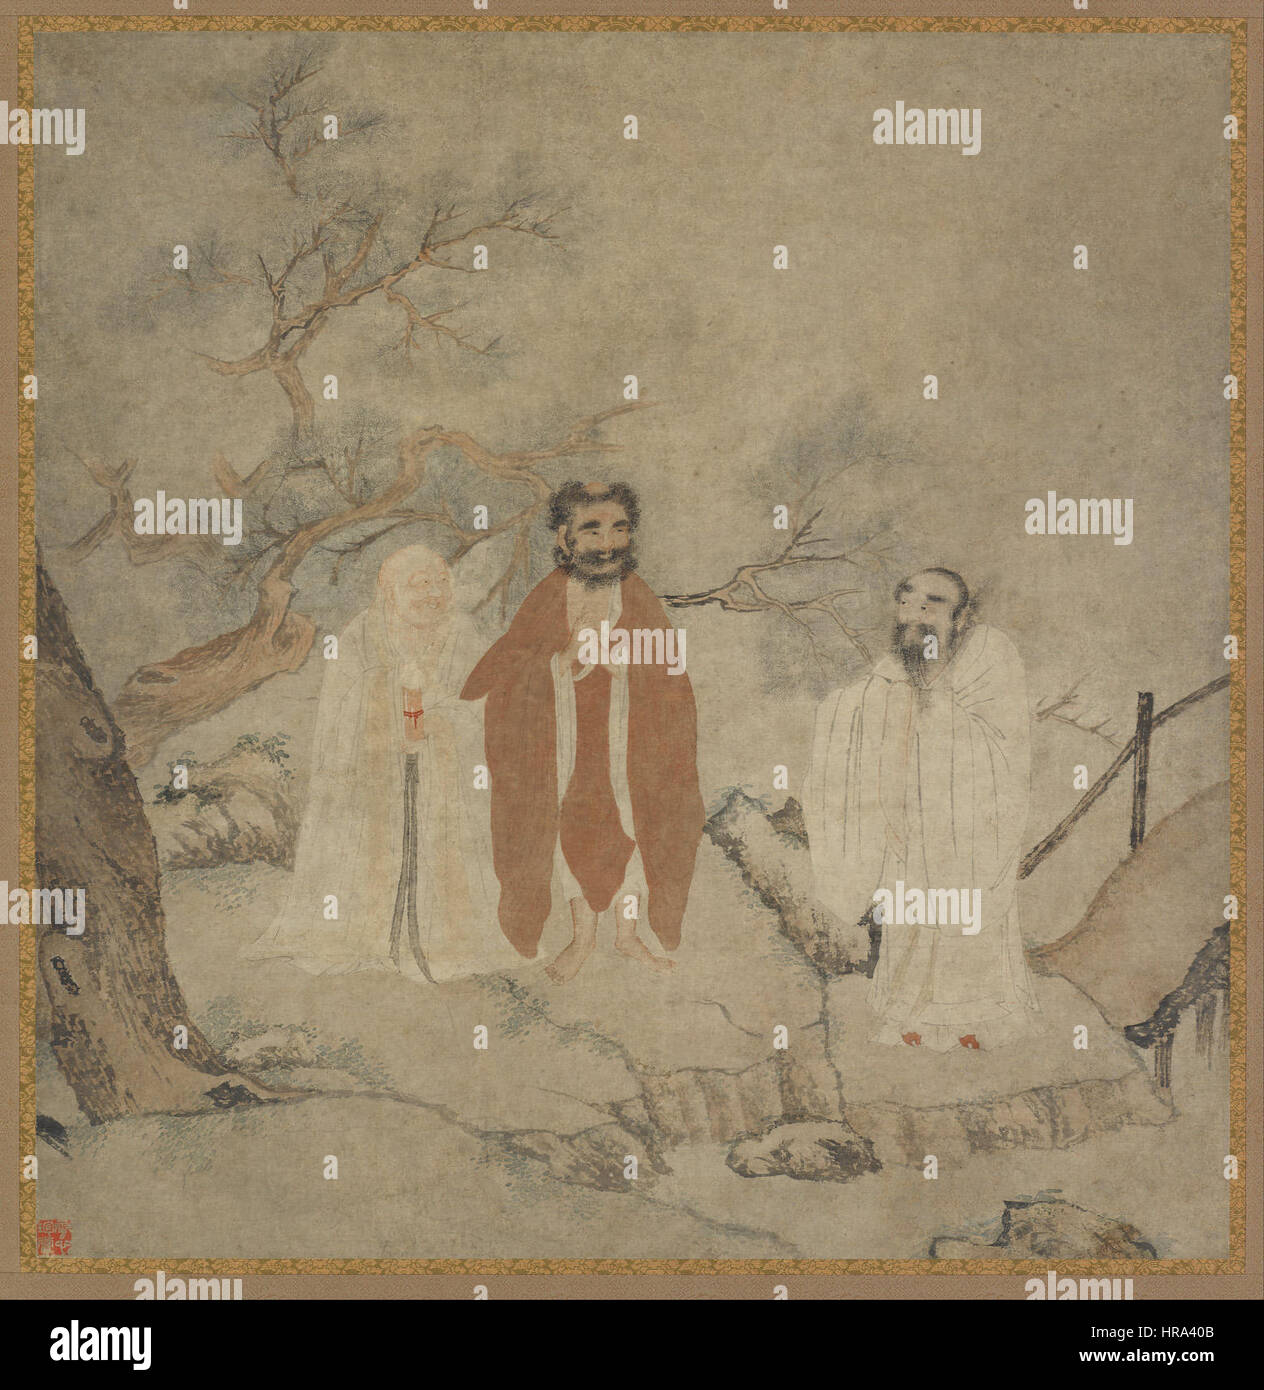 Sakyamuni, Lao Tseu, Confucius et - Google Art Project Banque D'Images